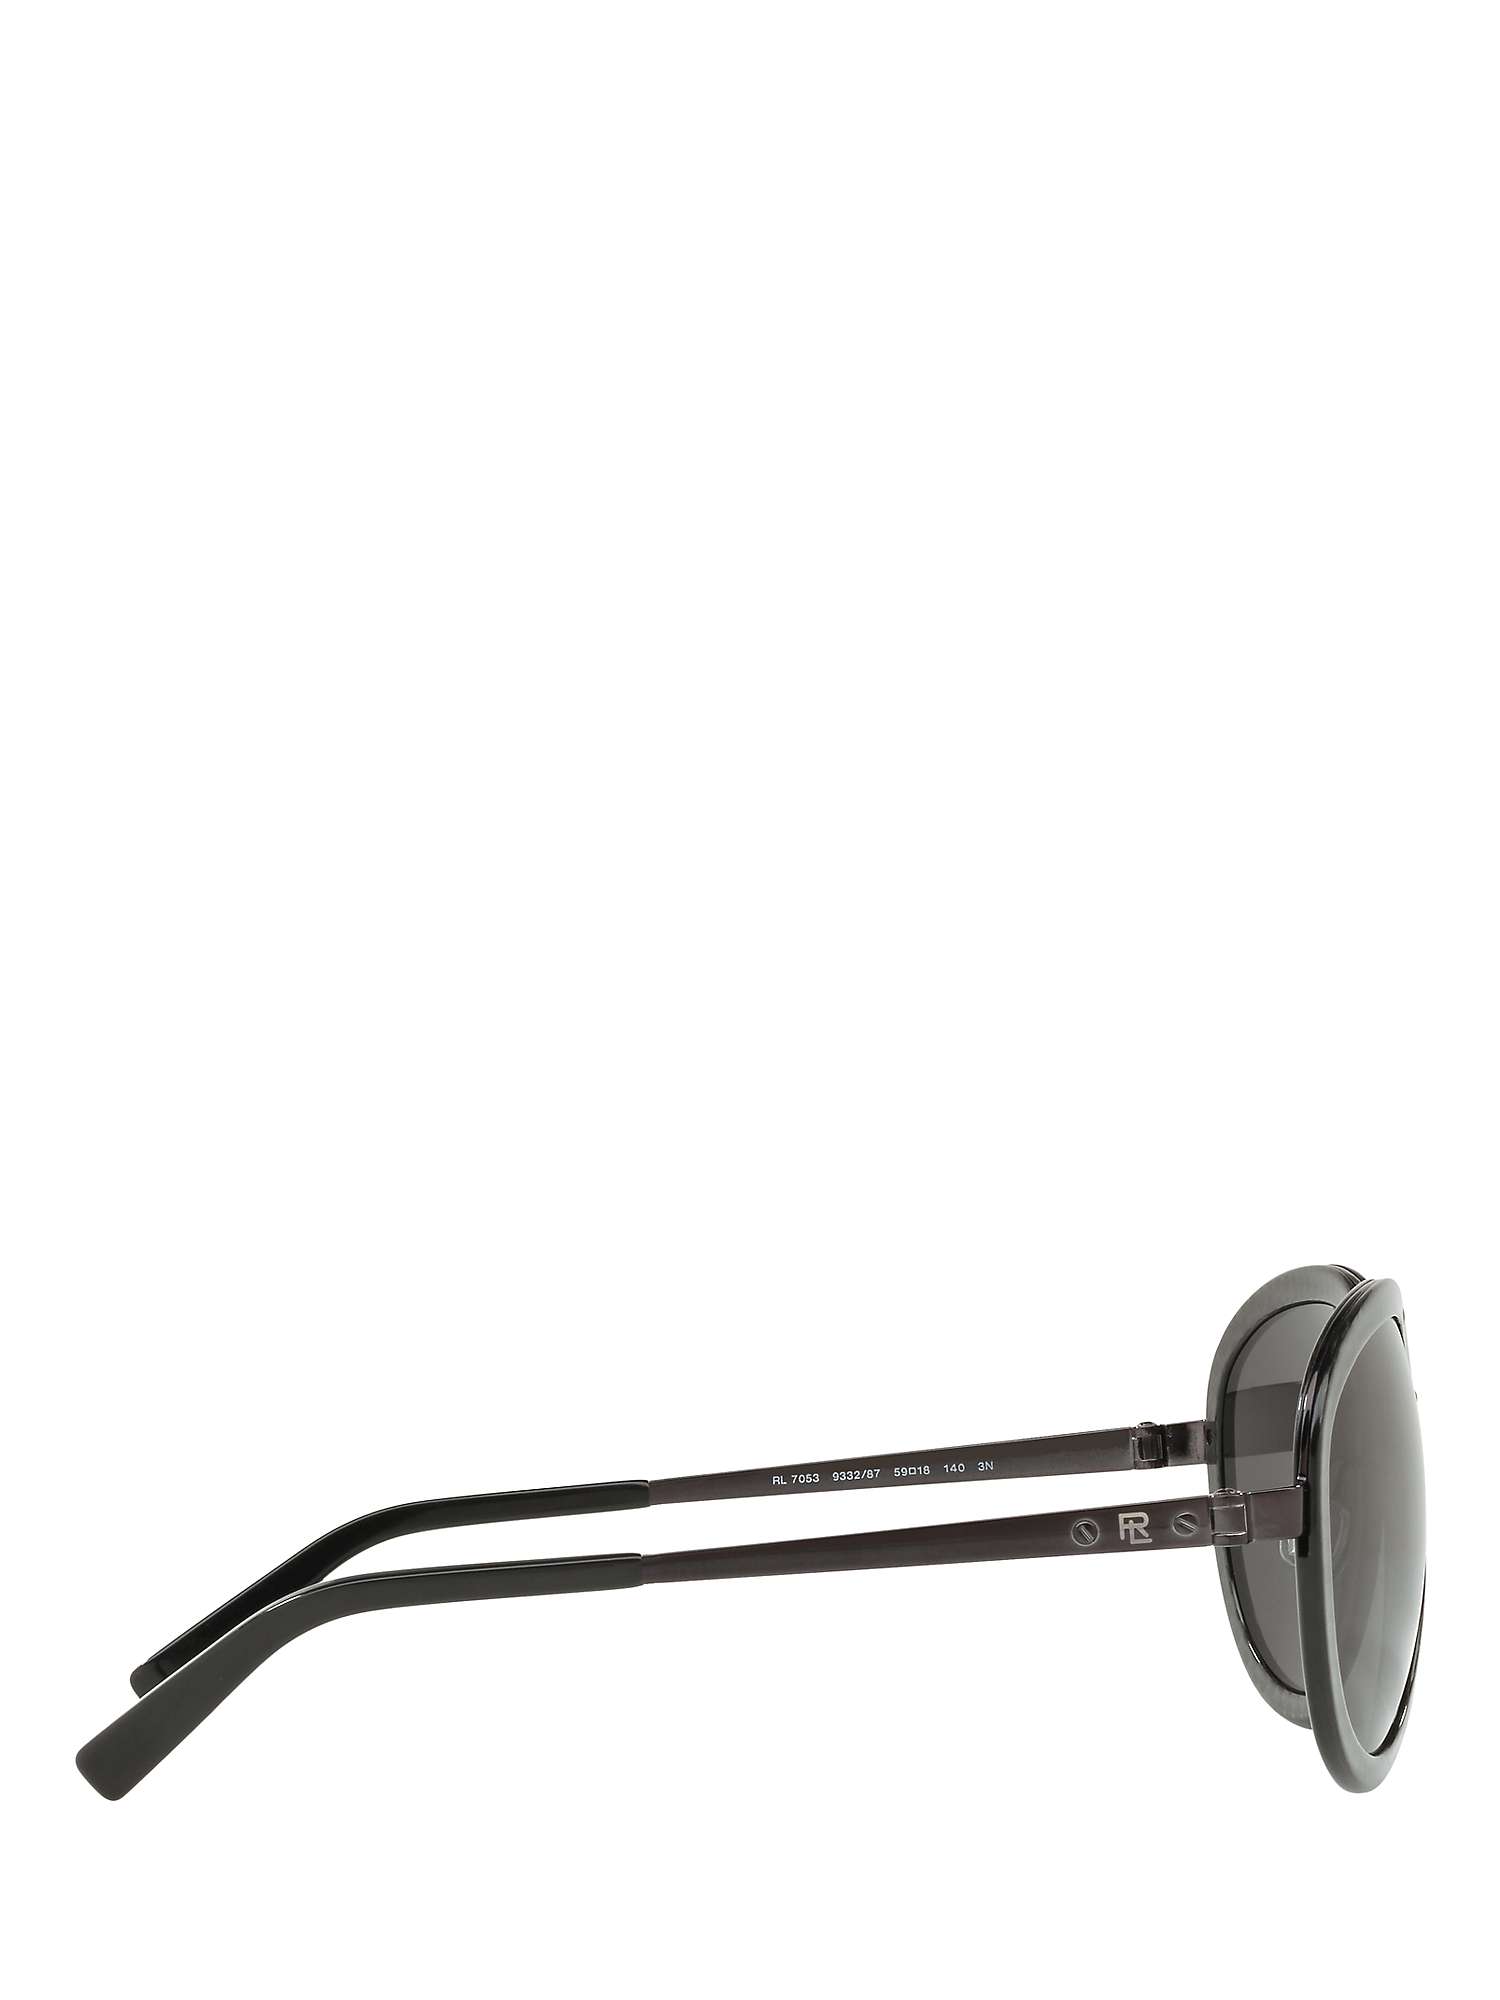 Buy Ralph Lauren RL7053 Unisex Aviator Sunglasses, Shiny Carbon/Grey Online at johnlewis.com